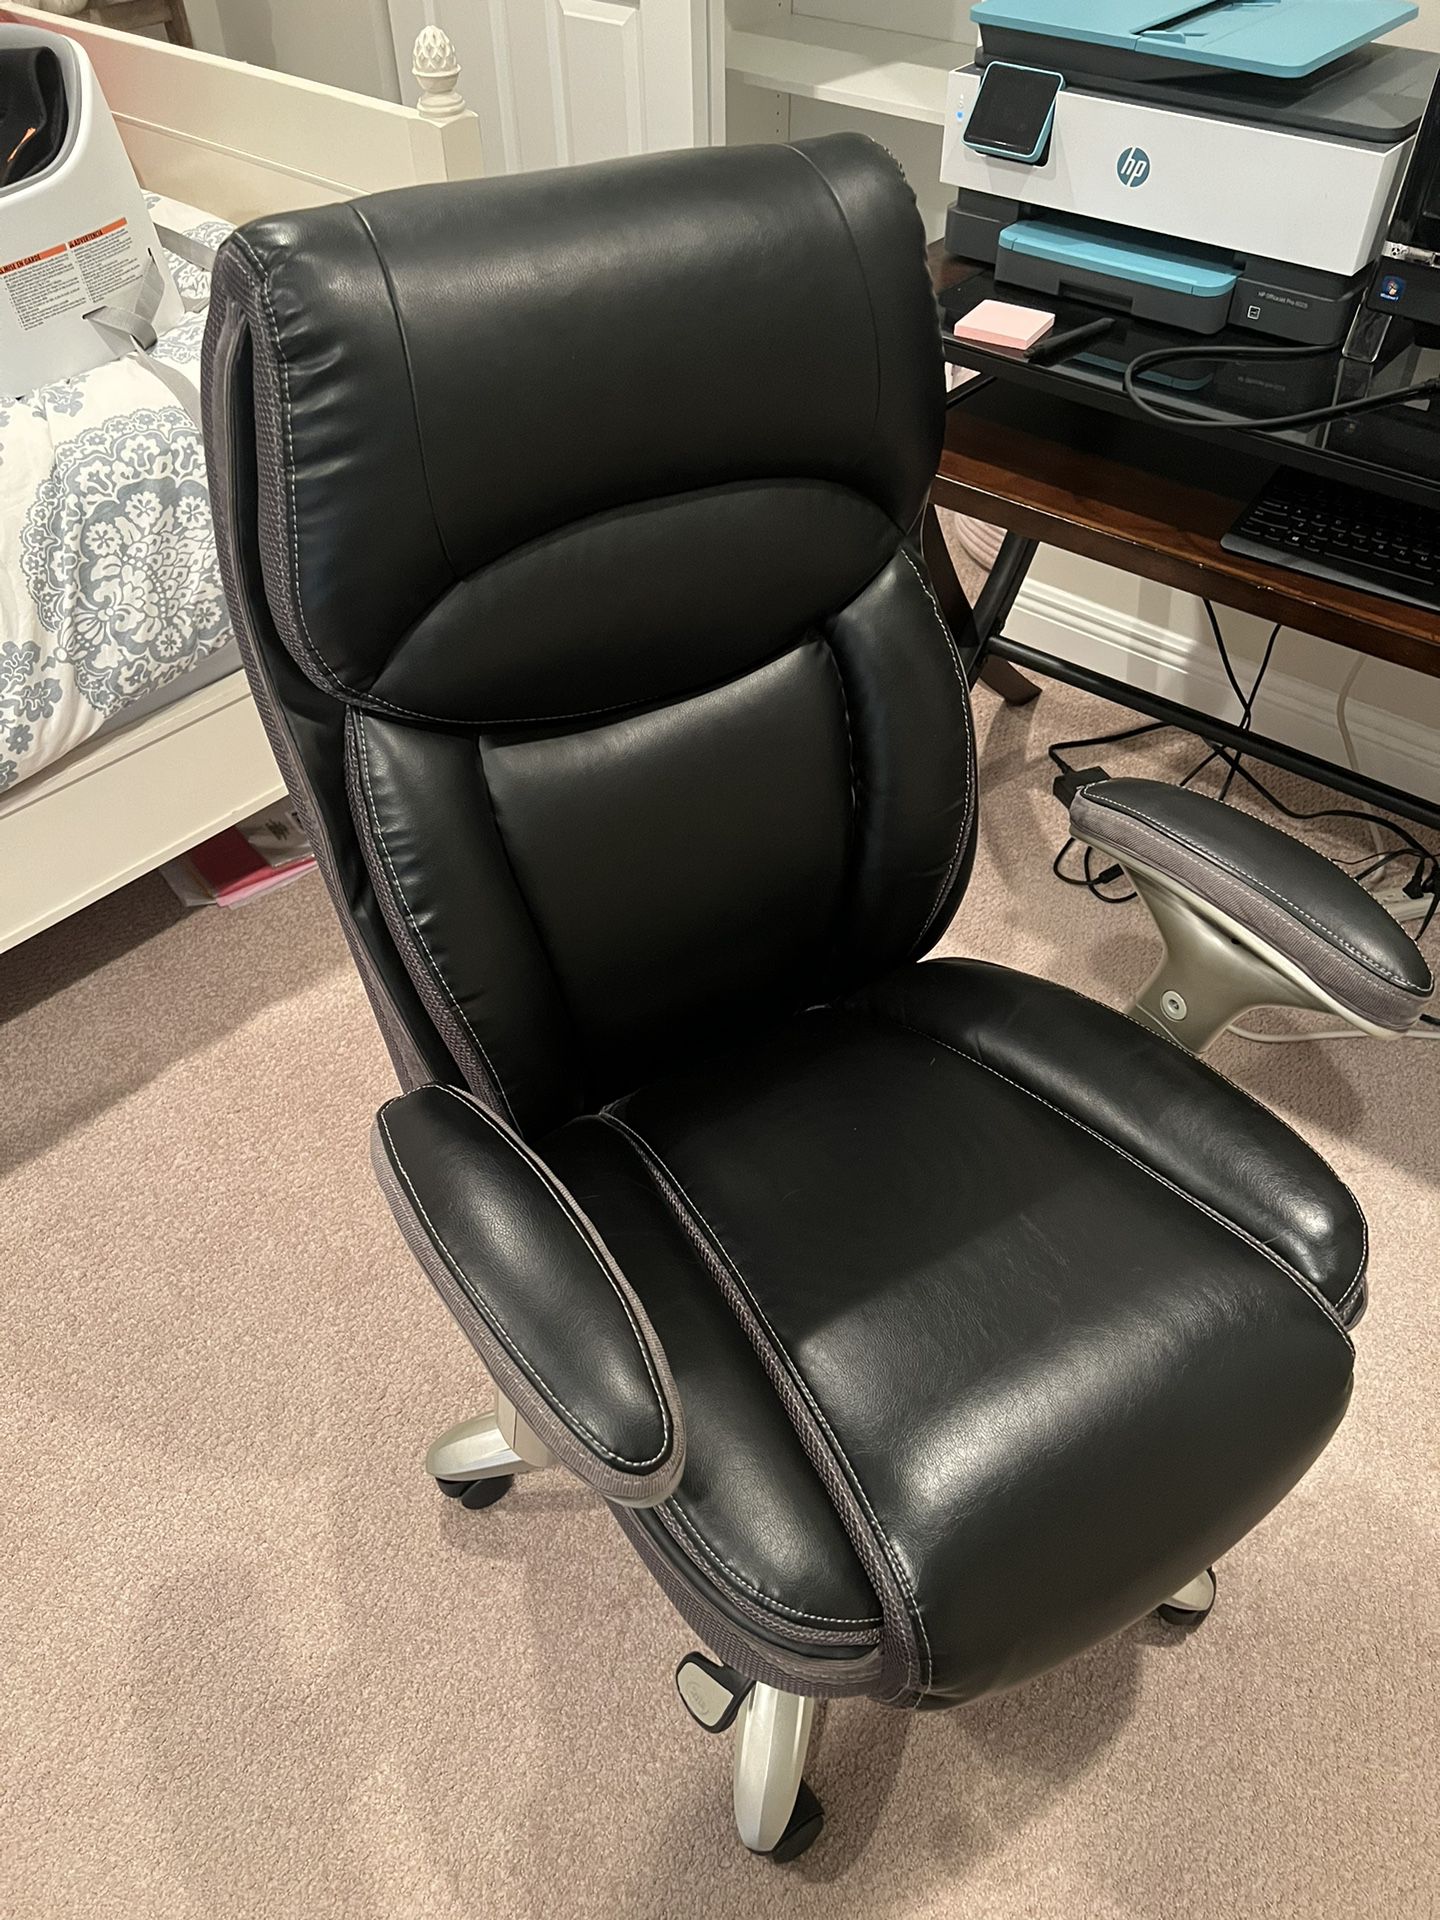 Serta Smart office chair $150!